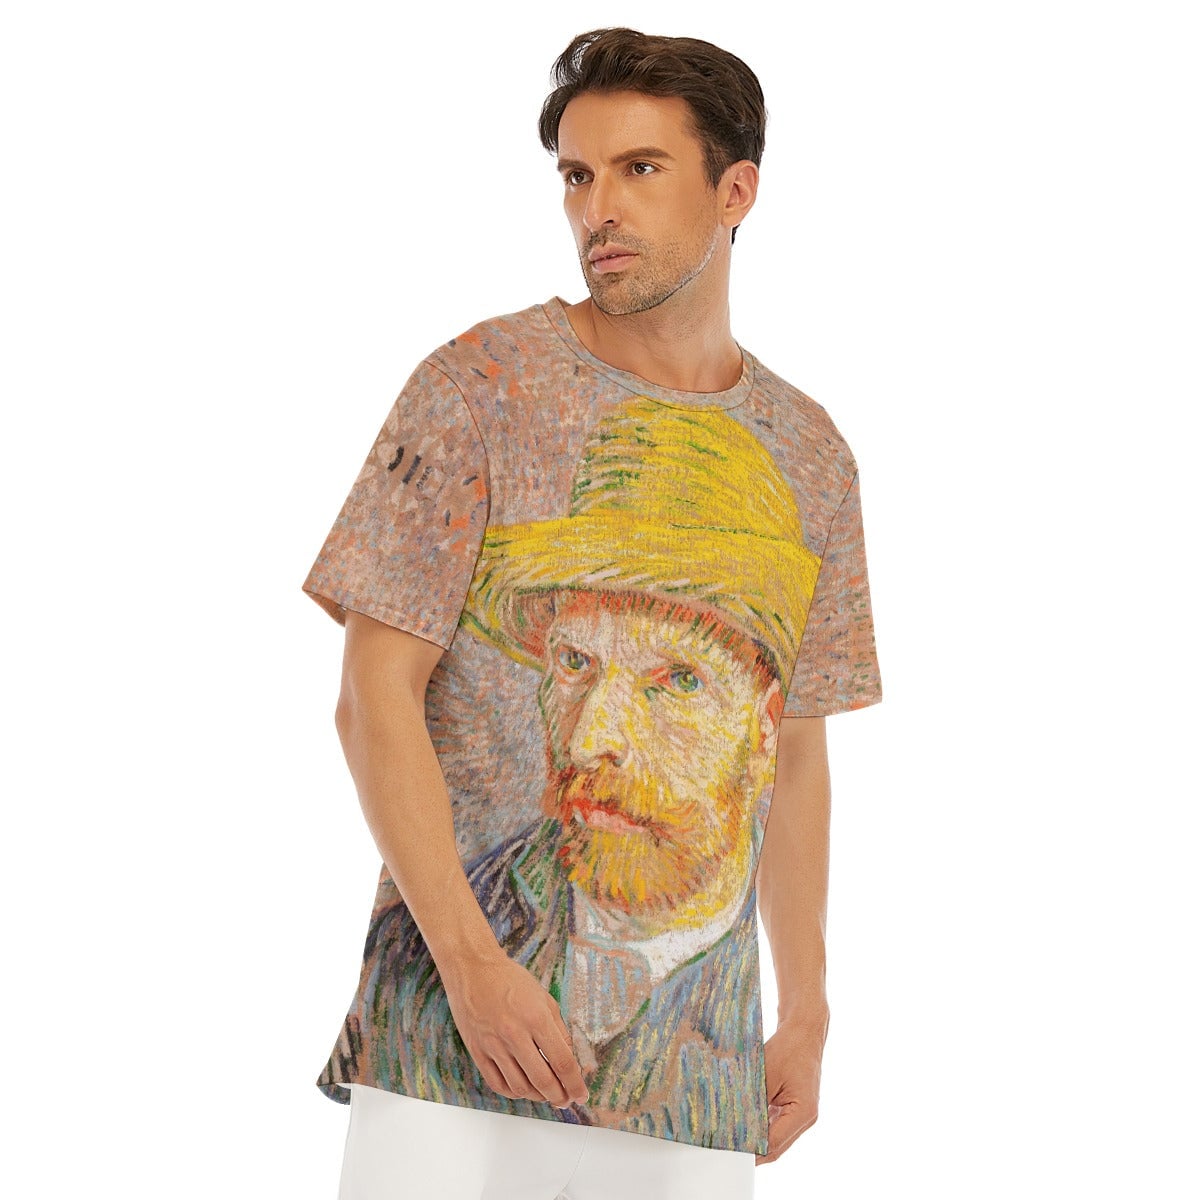 Self-Portrait with a Straw Hat Van Gogh T-Shirt